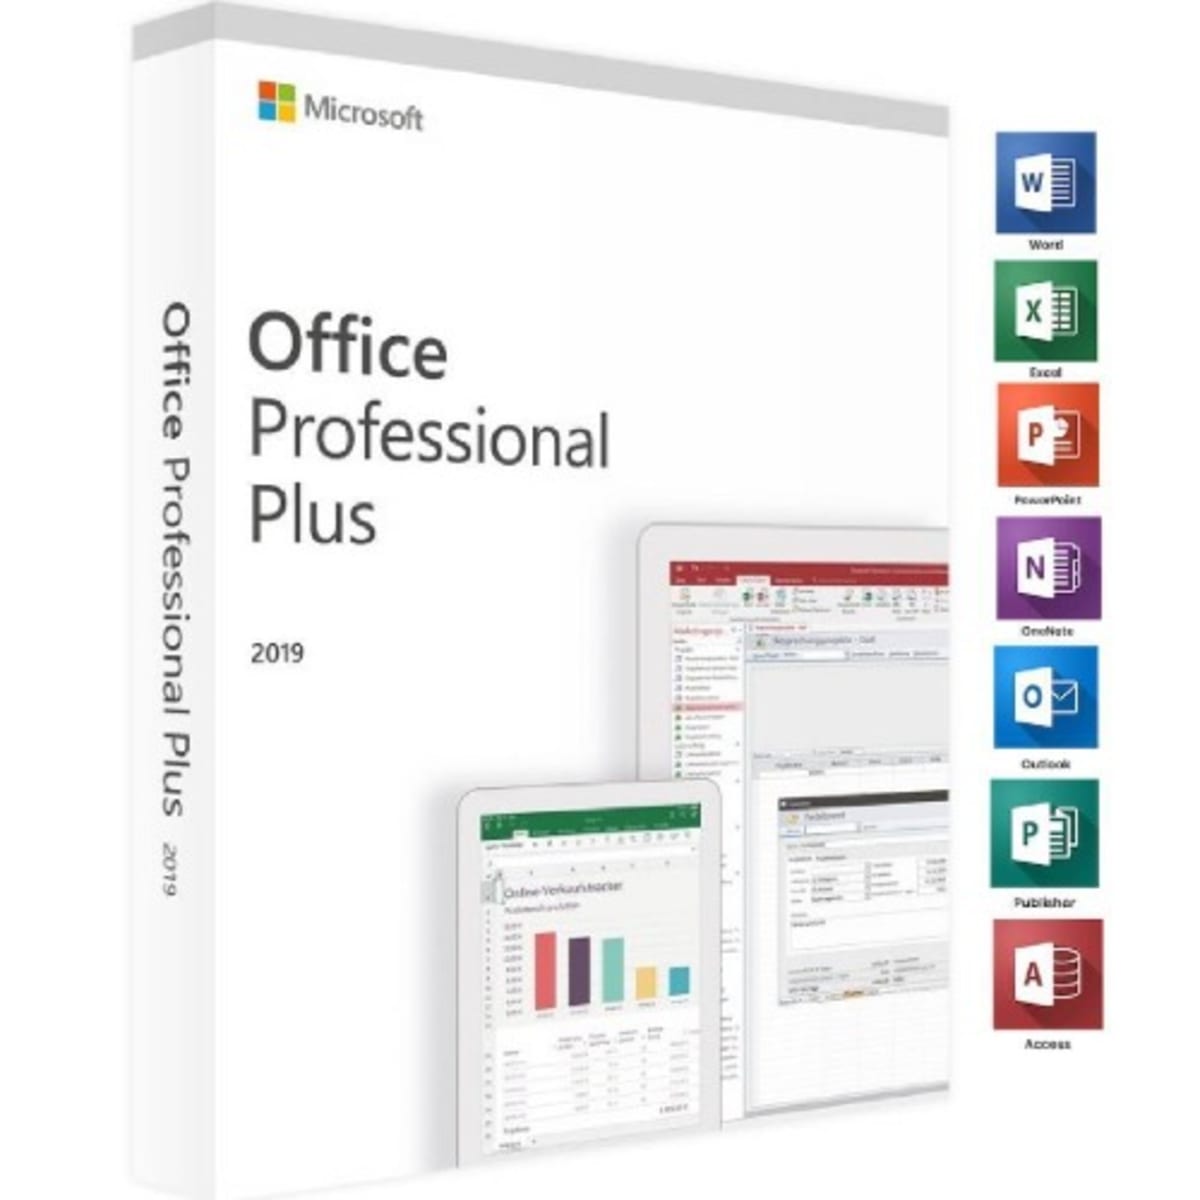 Microsoft Office 2019 Professional plus 1PC 32bit 64bitプロダクトキー正規日本語版ダウンロード版 Microsoft Office 2019 Home and Businessパッケージ版